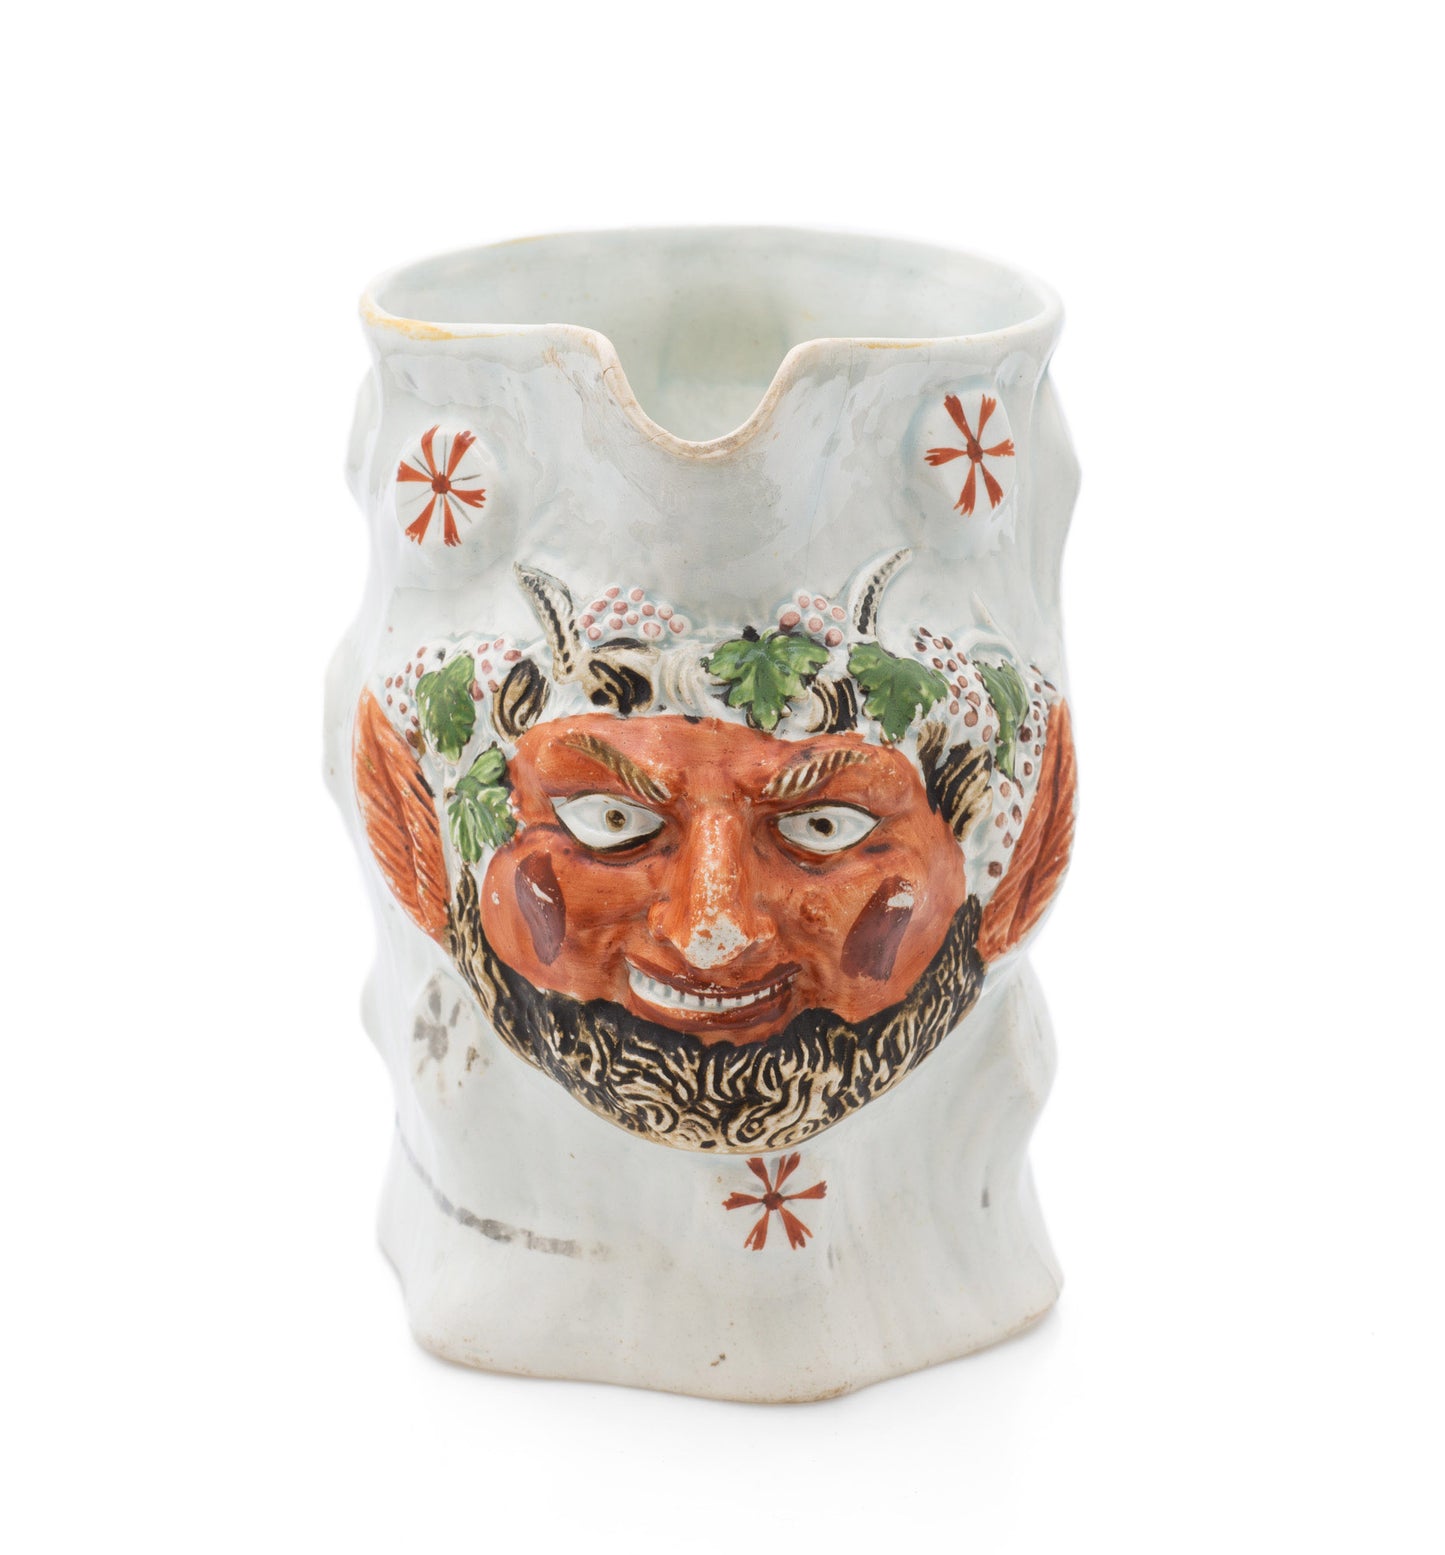 Georgian Antique Moulded Pottery Jug Bacchus/Devil Grotesque Mask Head c1820 (Code 2526)